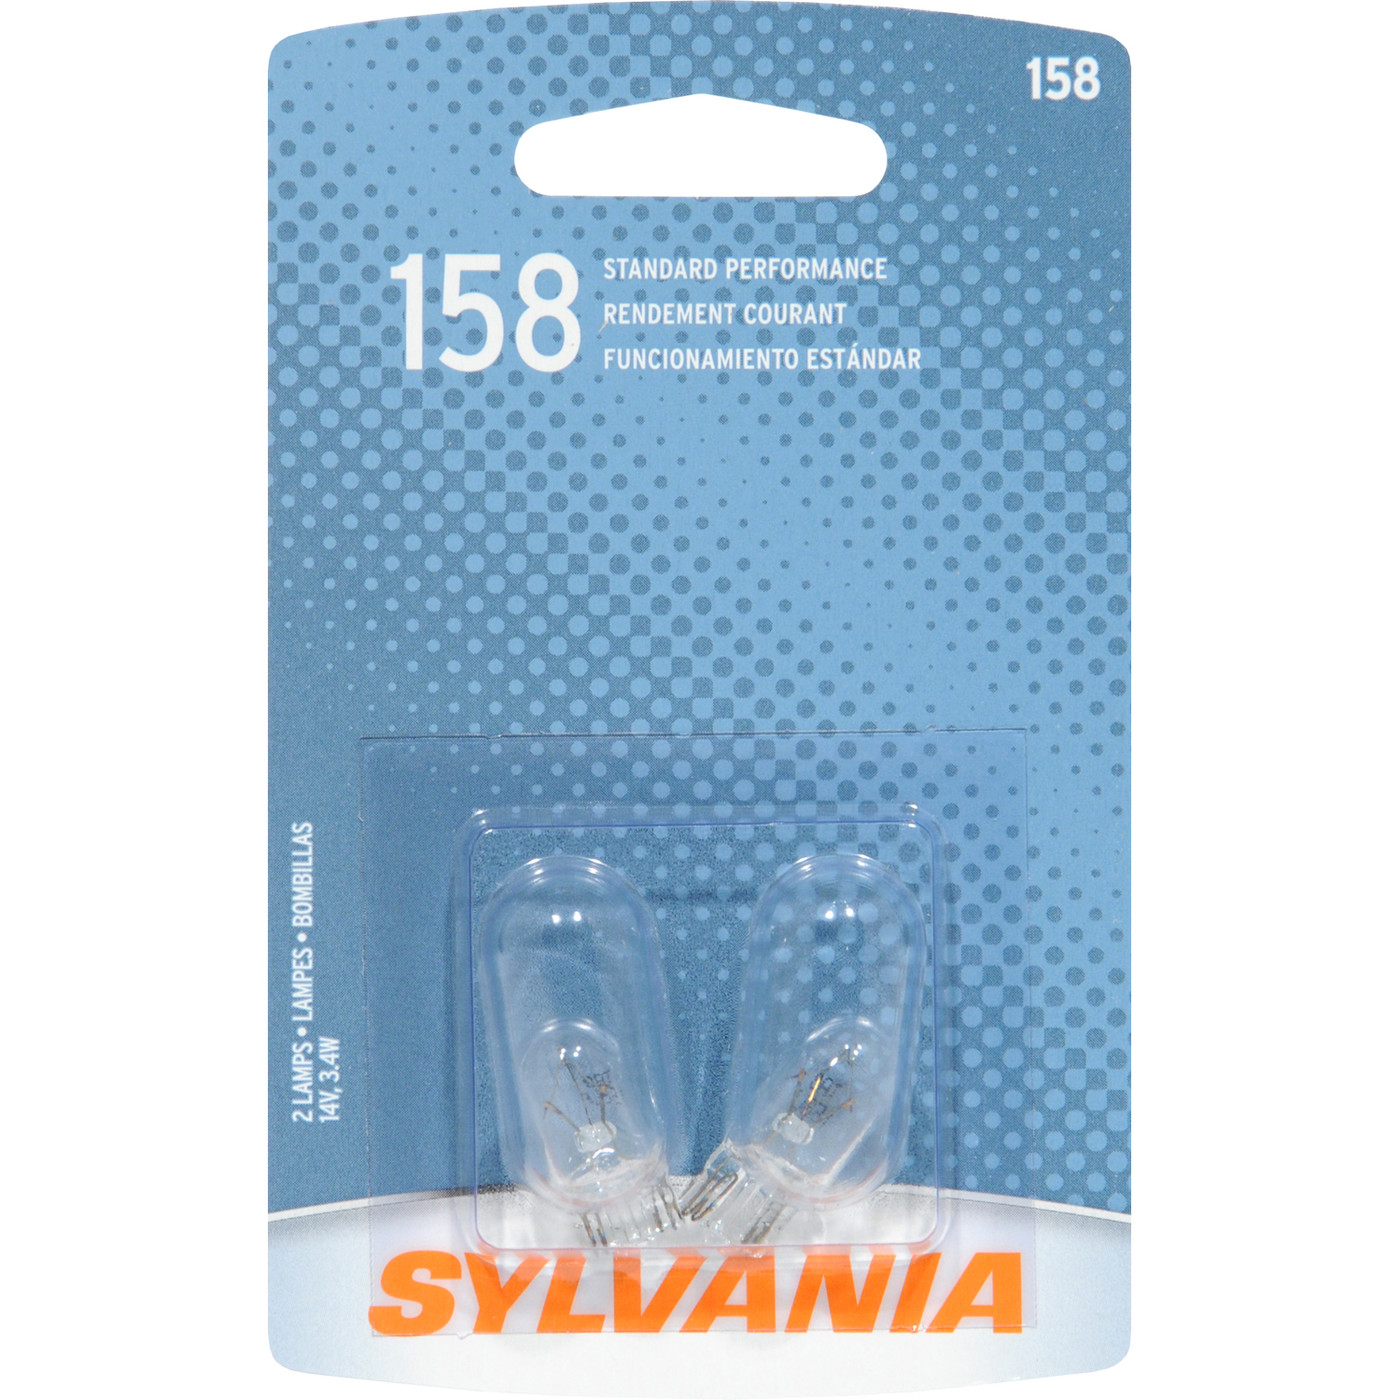 SYLVANIA RETAIL PACKS - Blister Pack Twin Parking Light Bulb - SYR 158.BP2